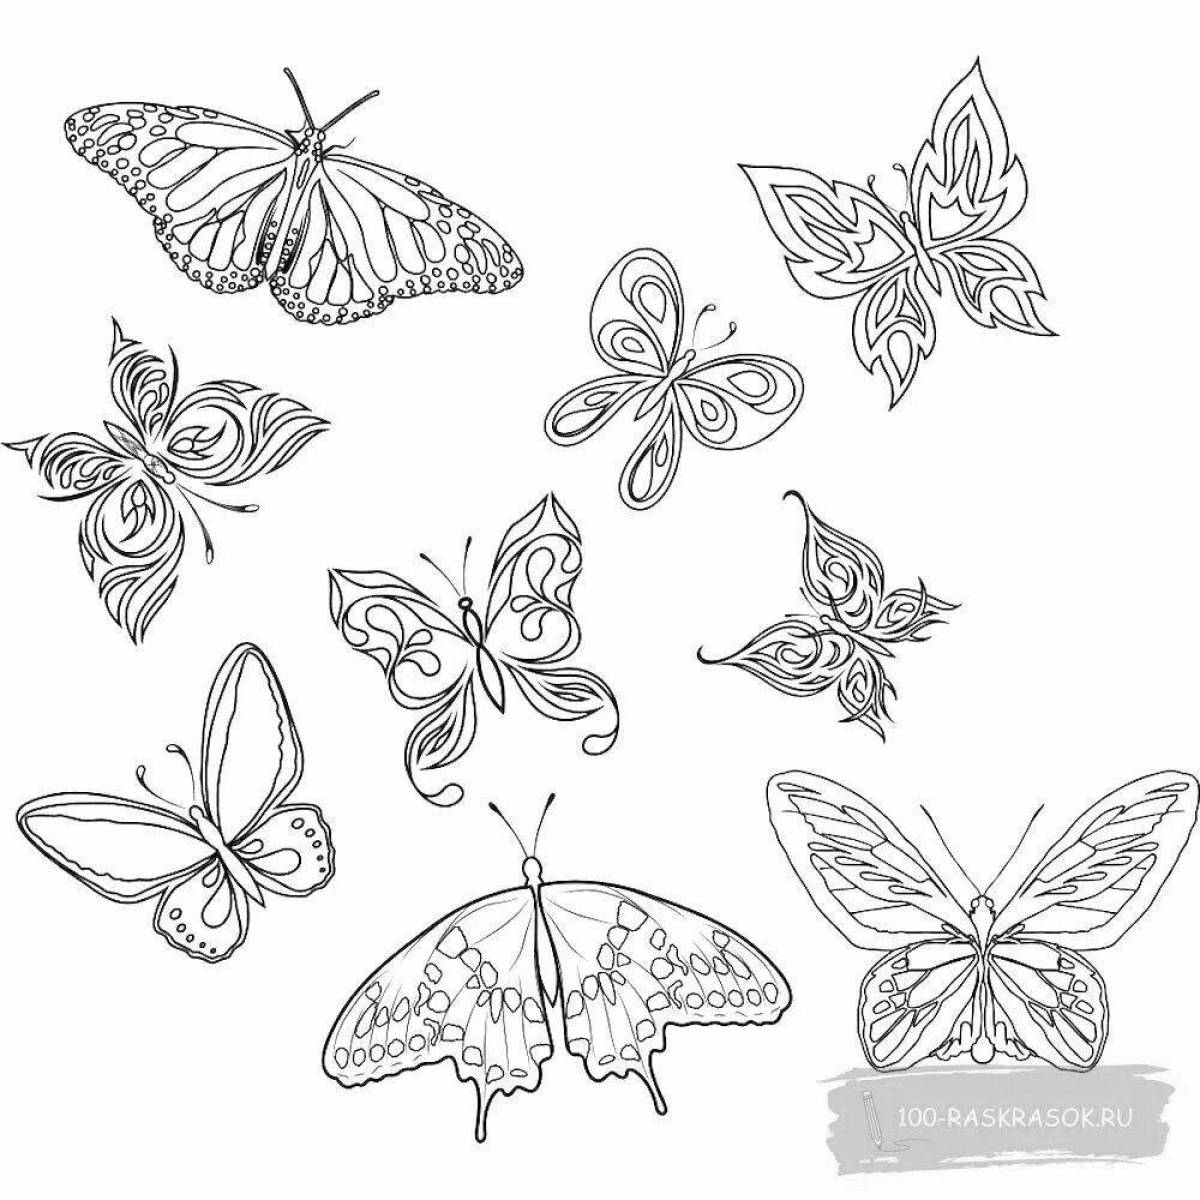 Cute little butterflies coloring pages